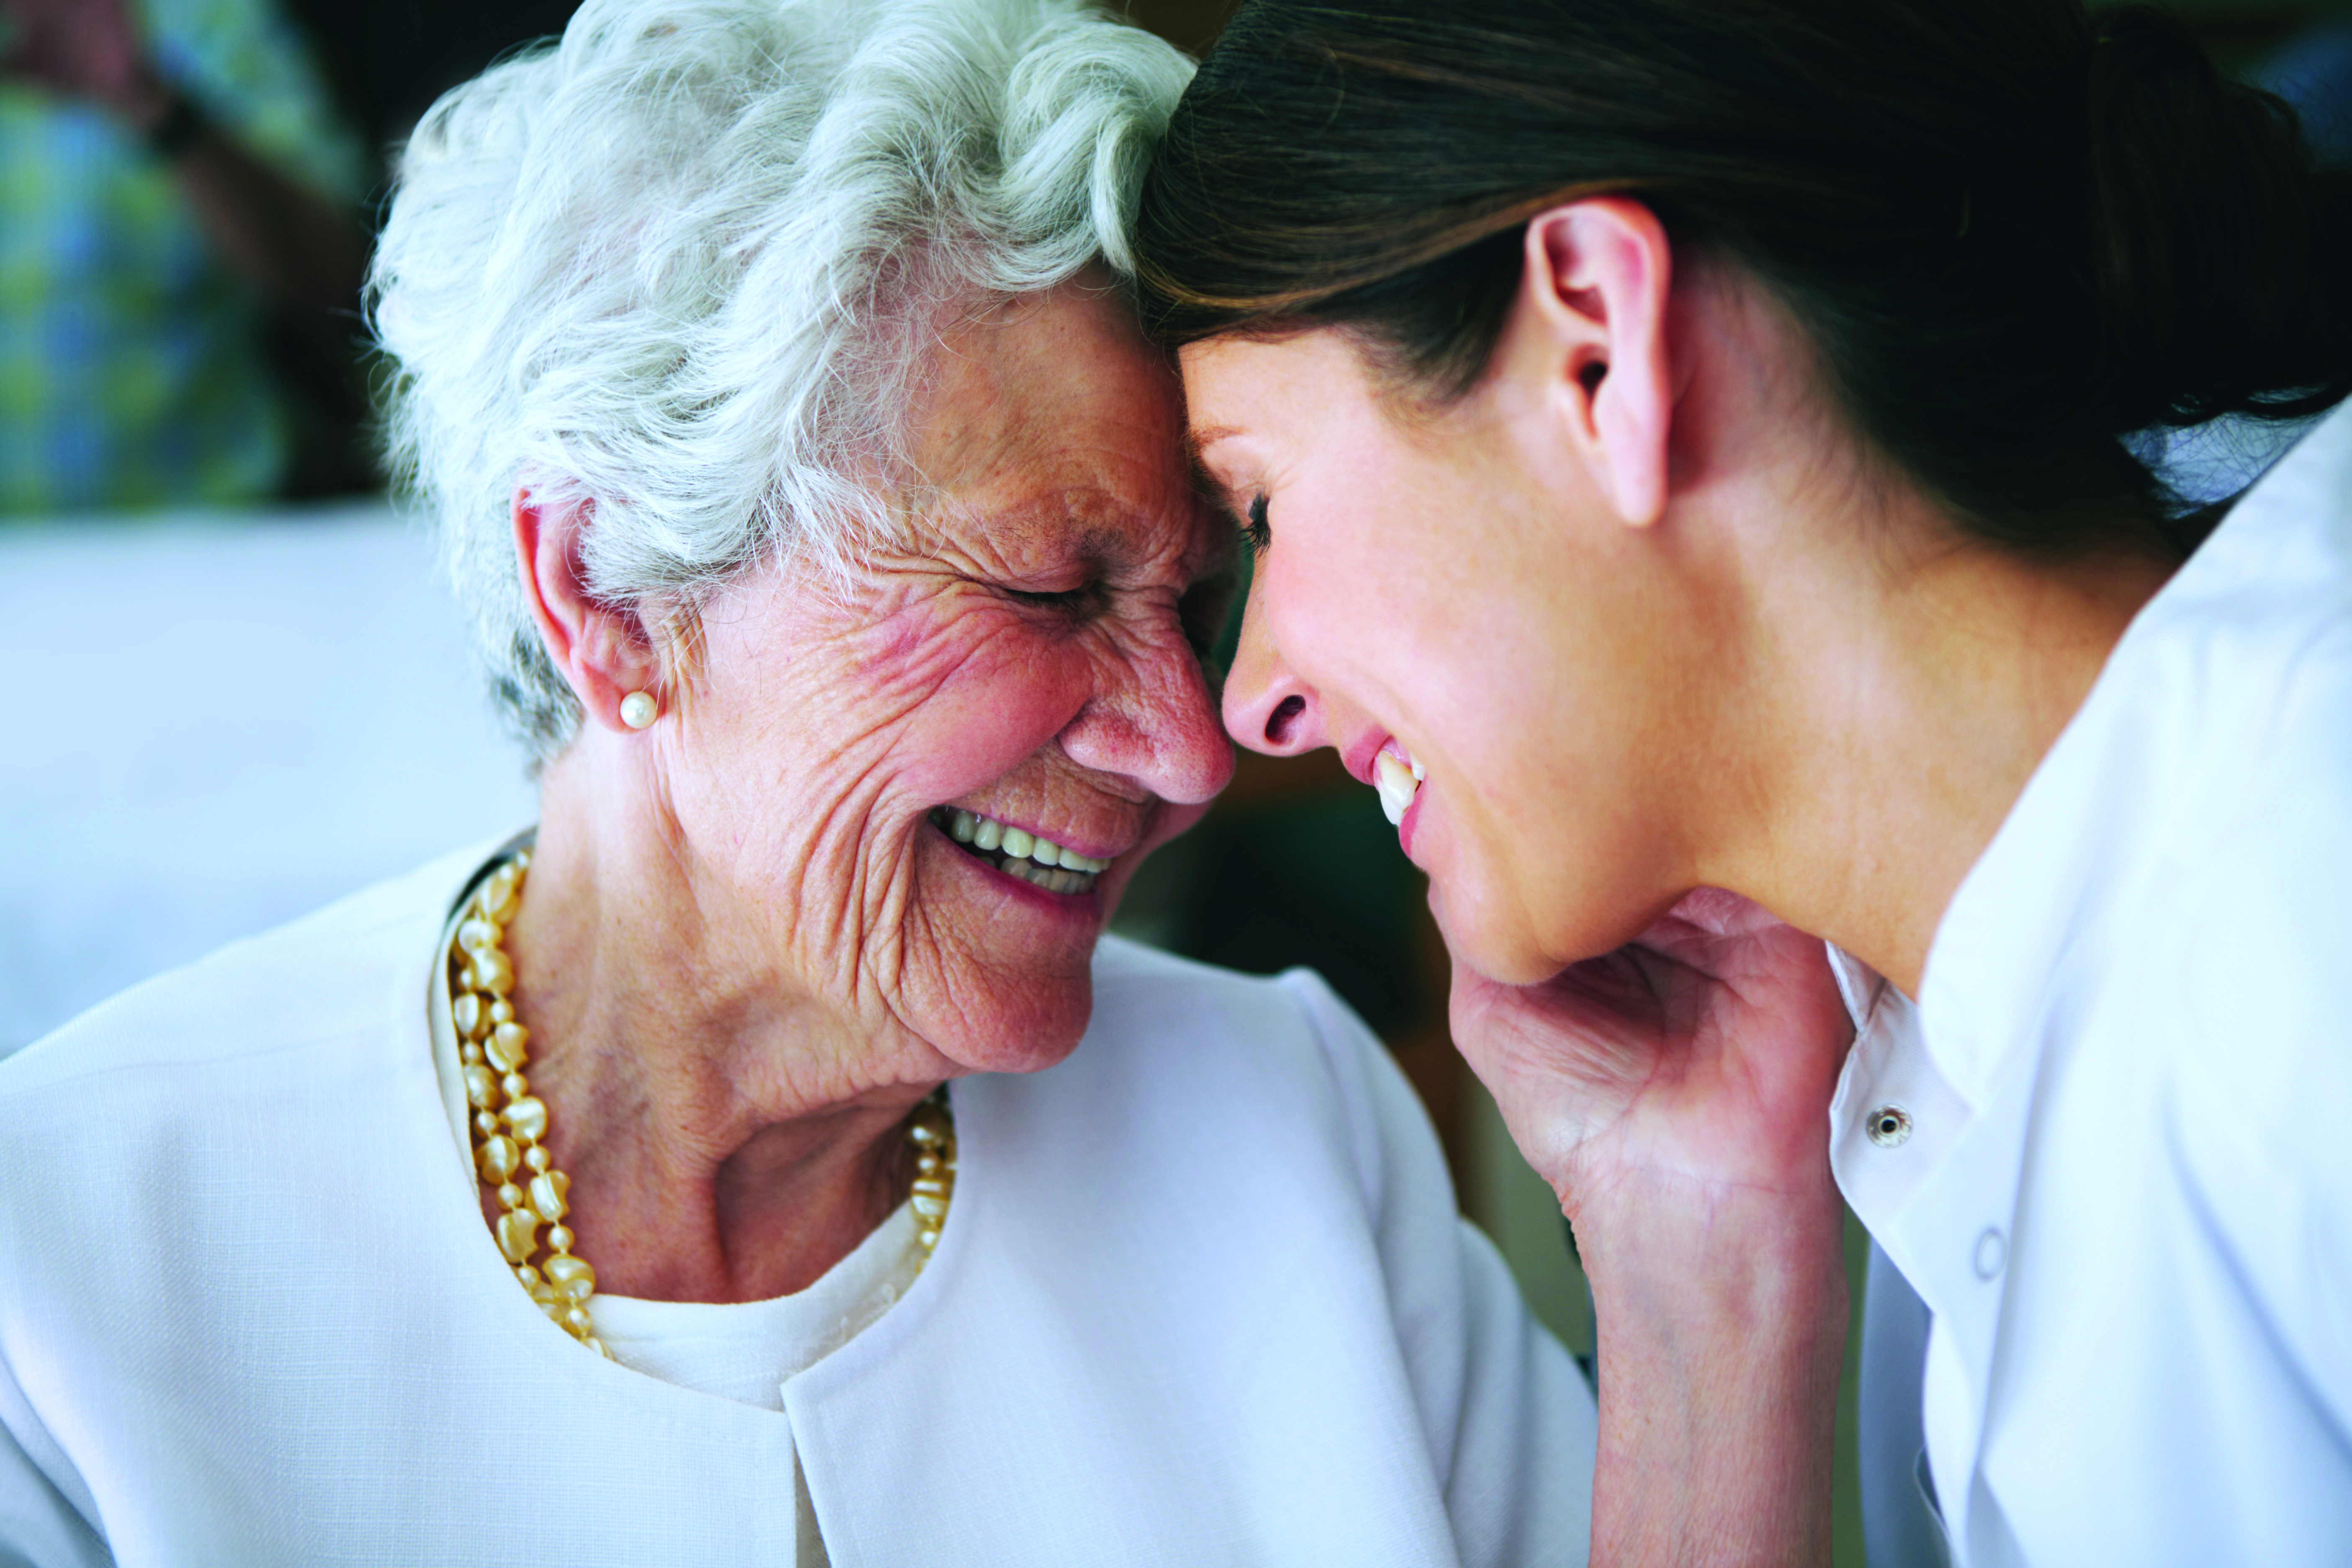 An elderly woman affectionately thanking her nurse